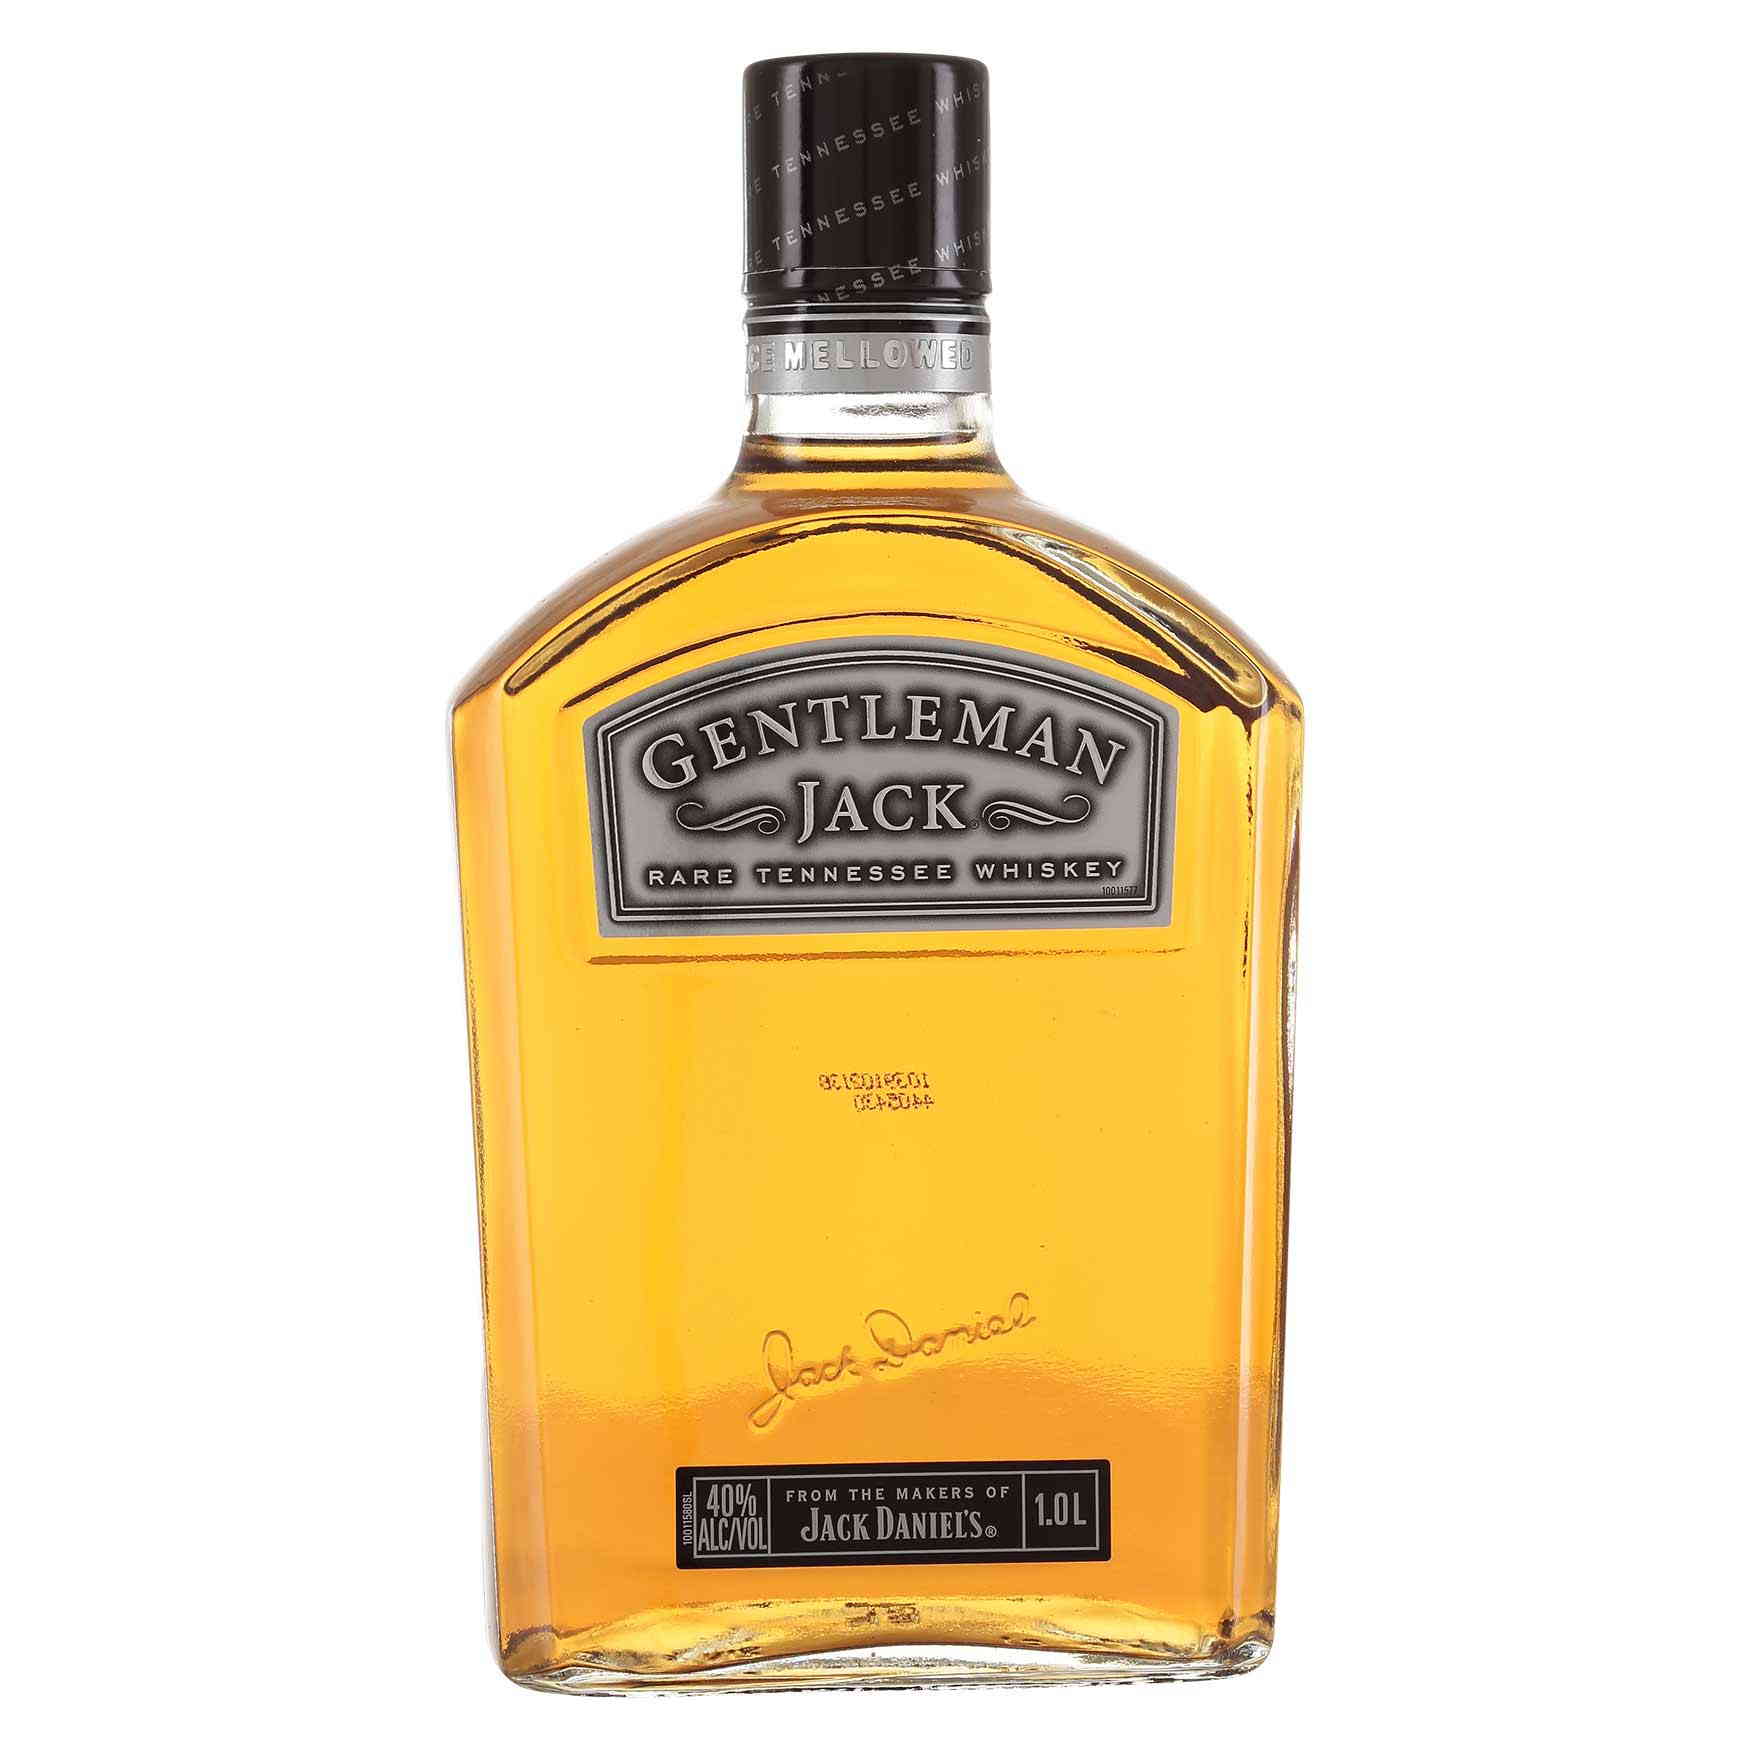 Jack Daniels Gentleman Jack 40% Whiskey Double Mellowed l 1 Tennessee